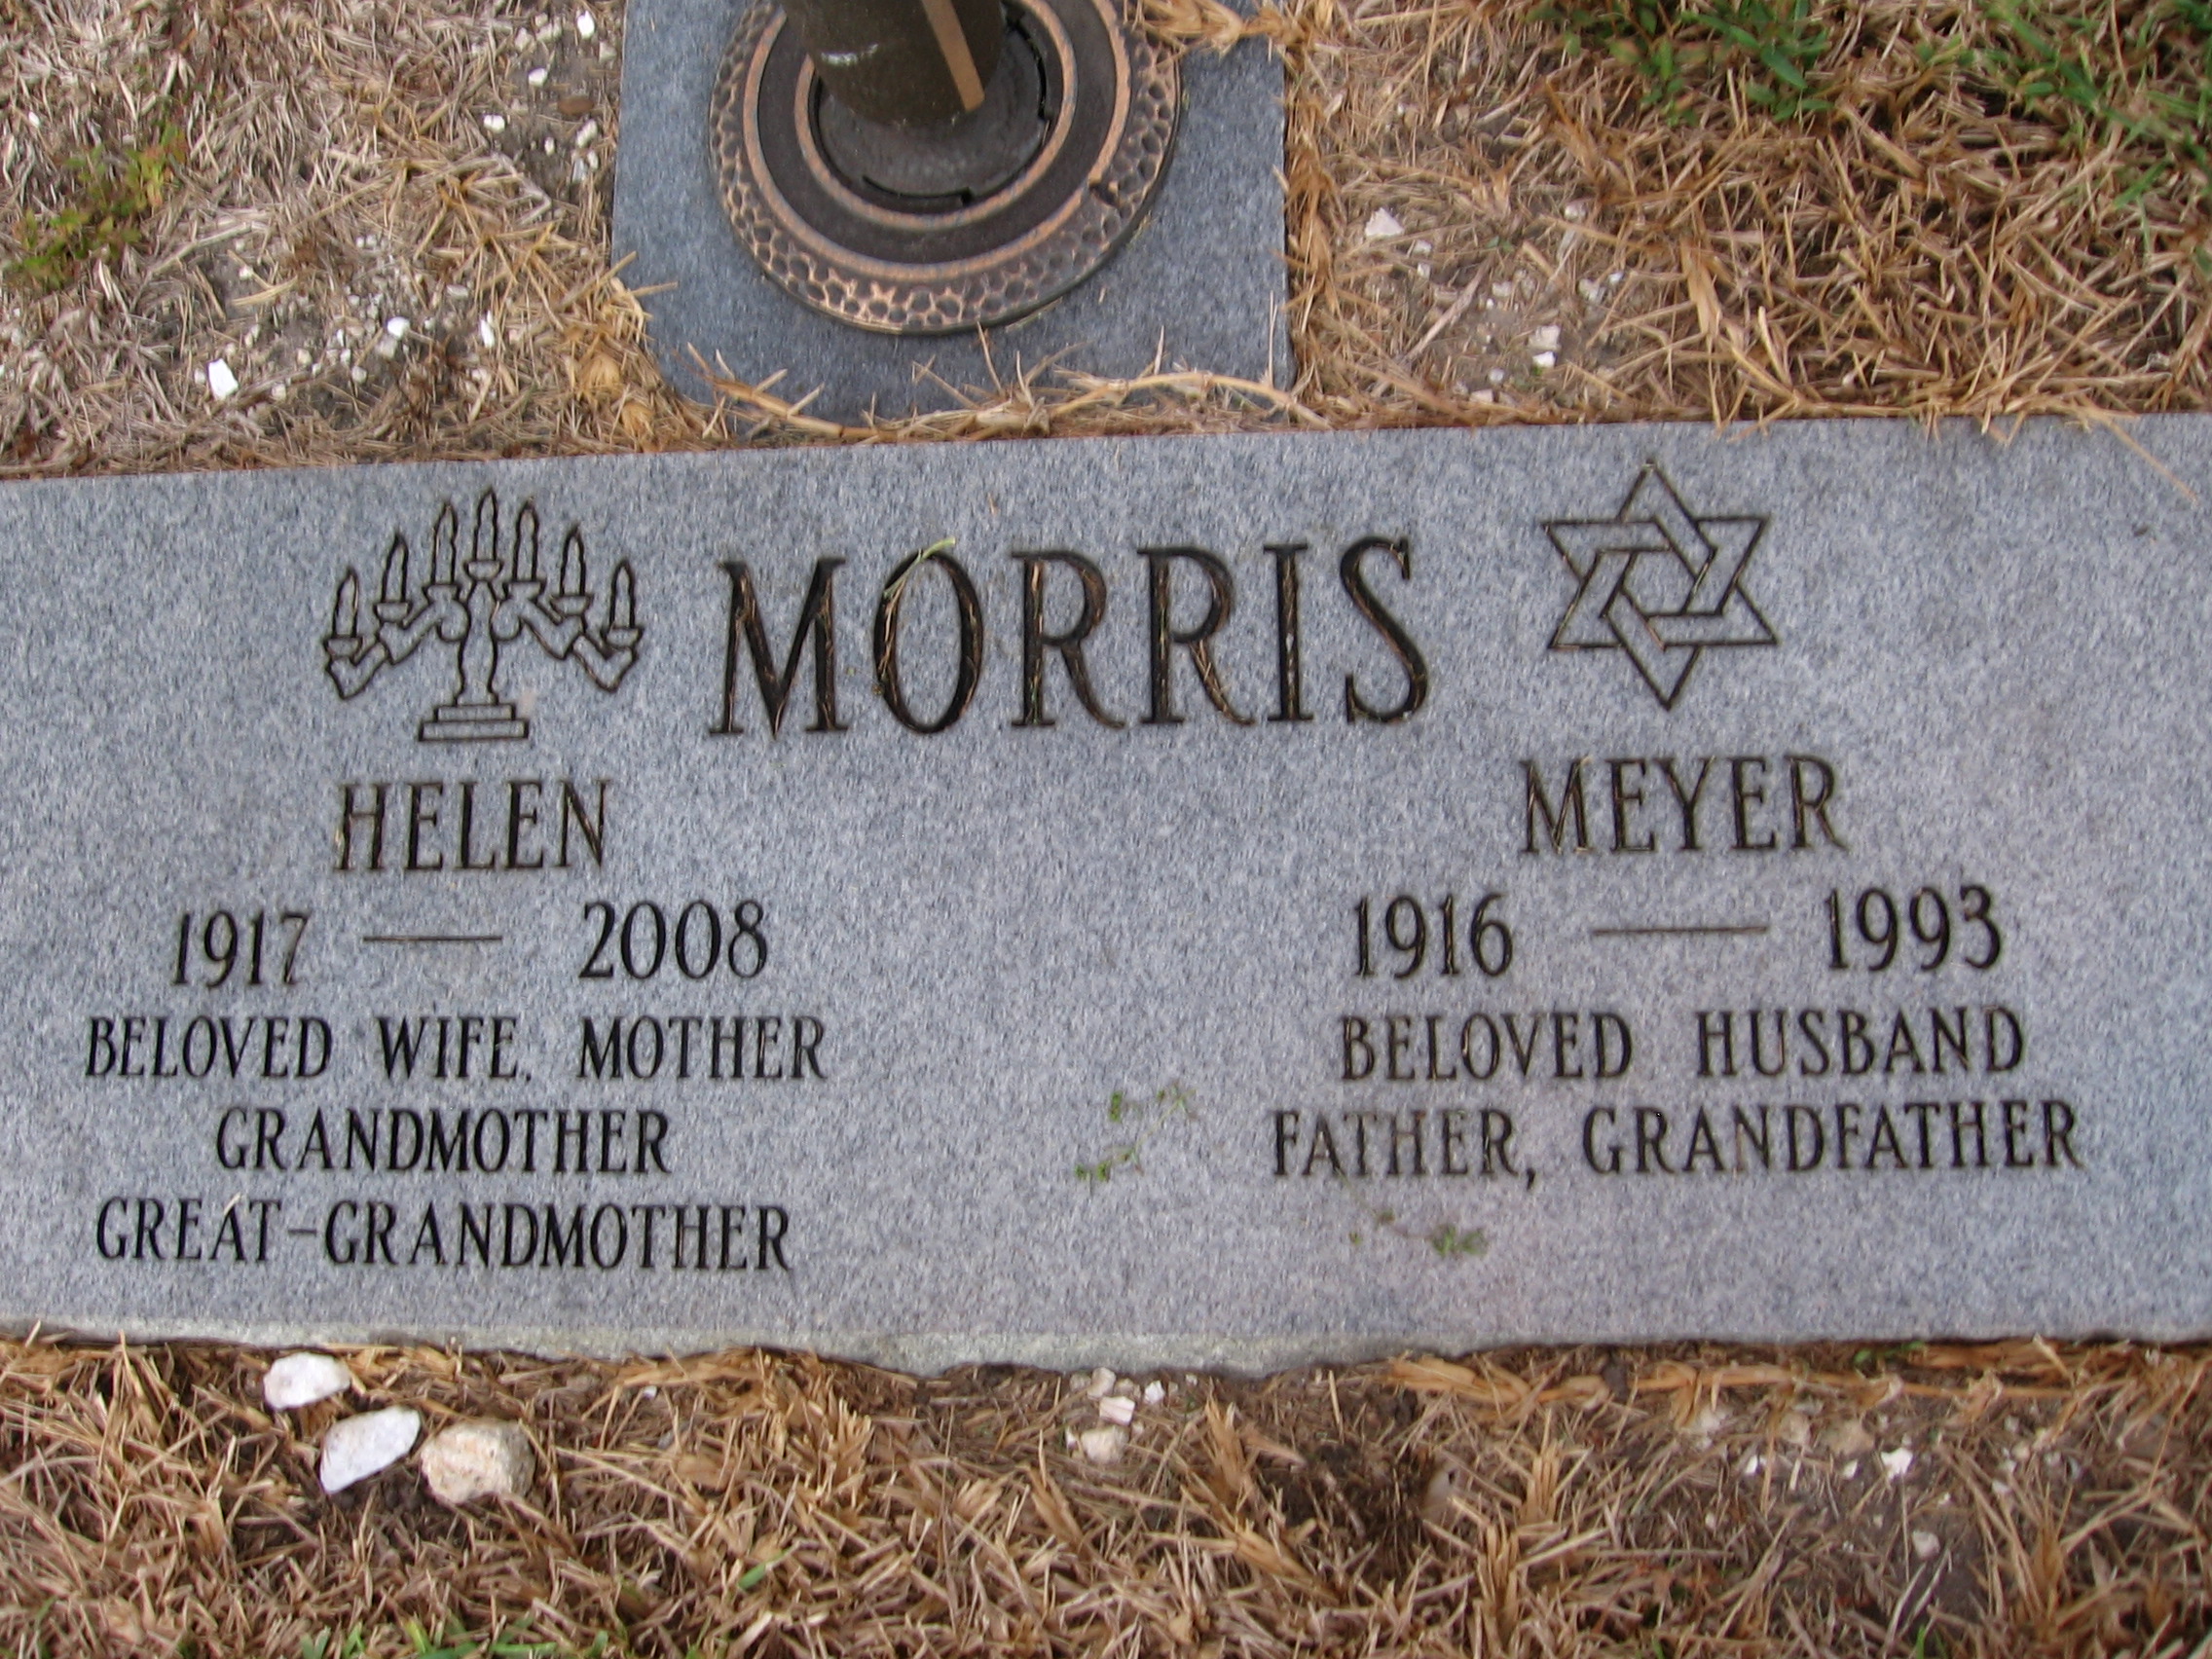 Meyer Morris